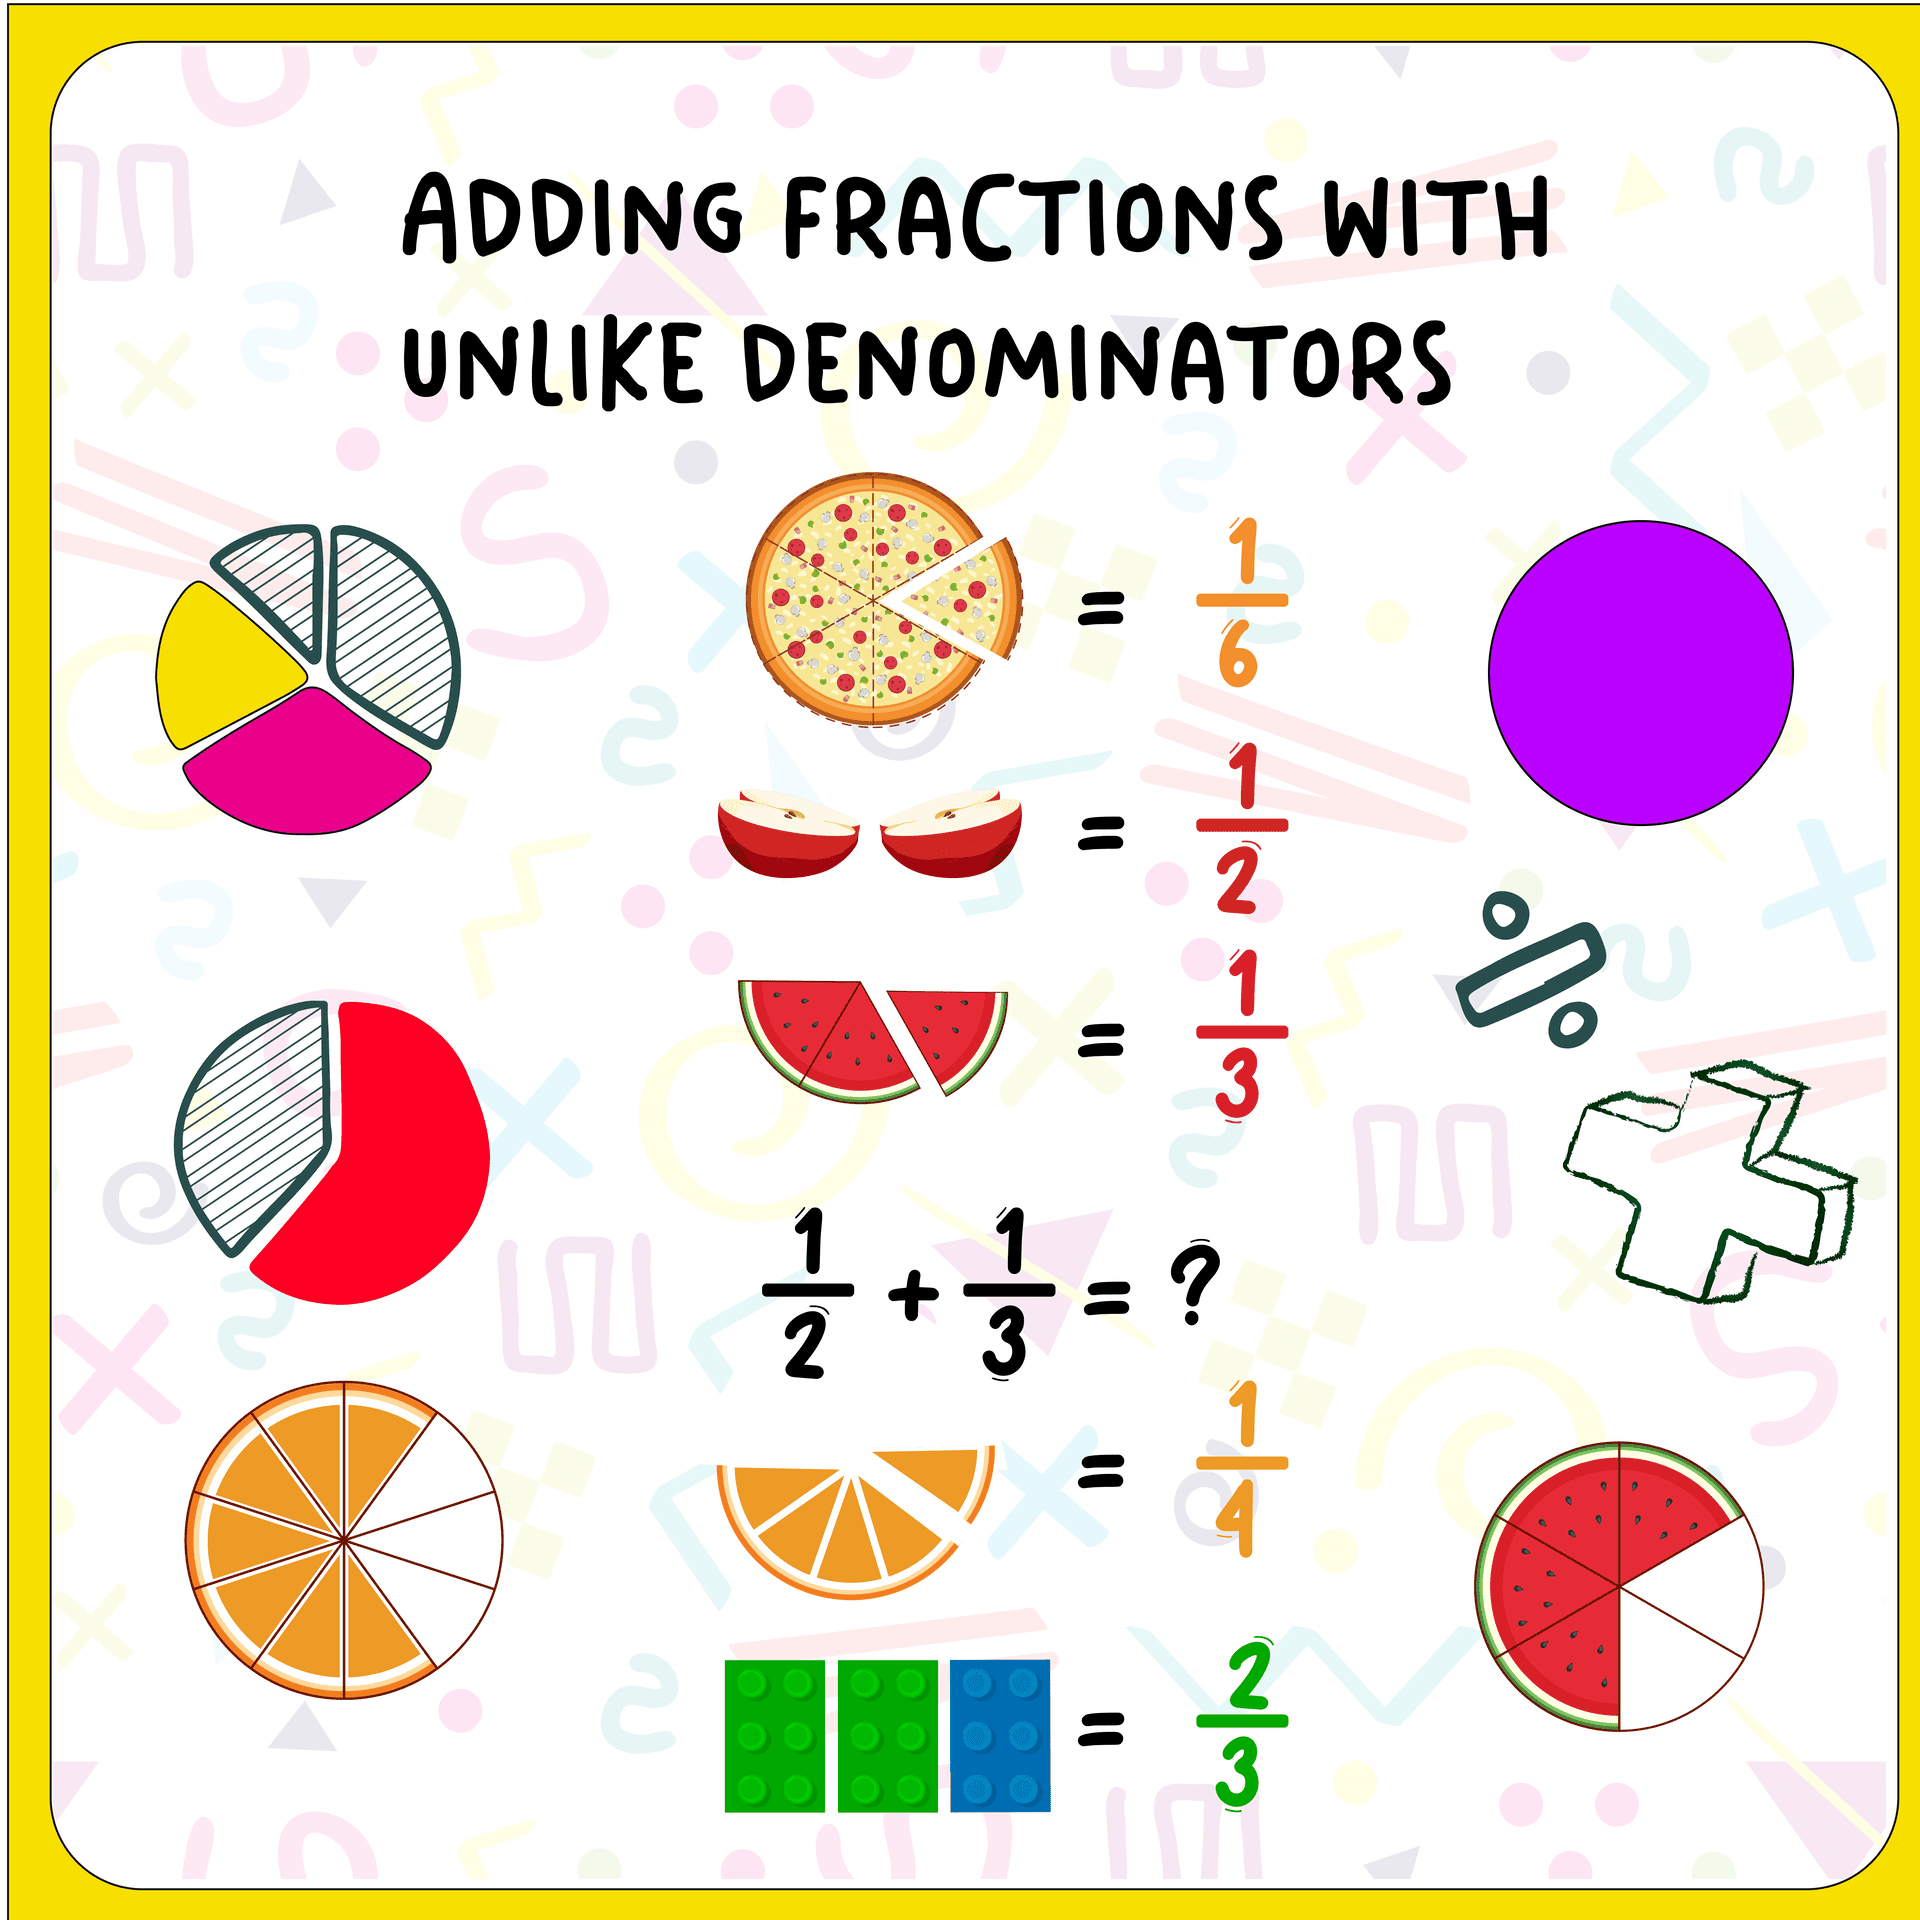 Adding fractions with unlike denominators